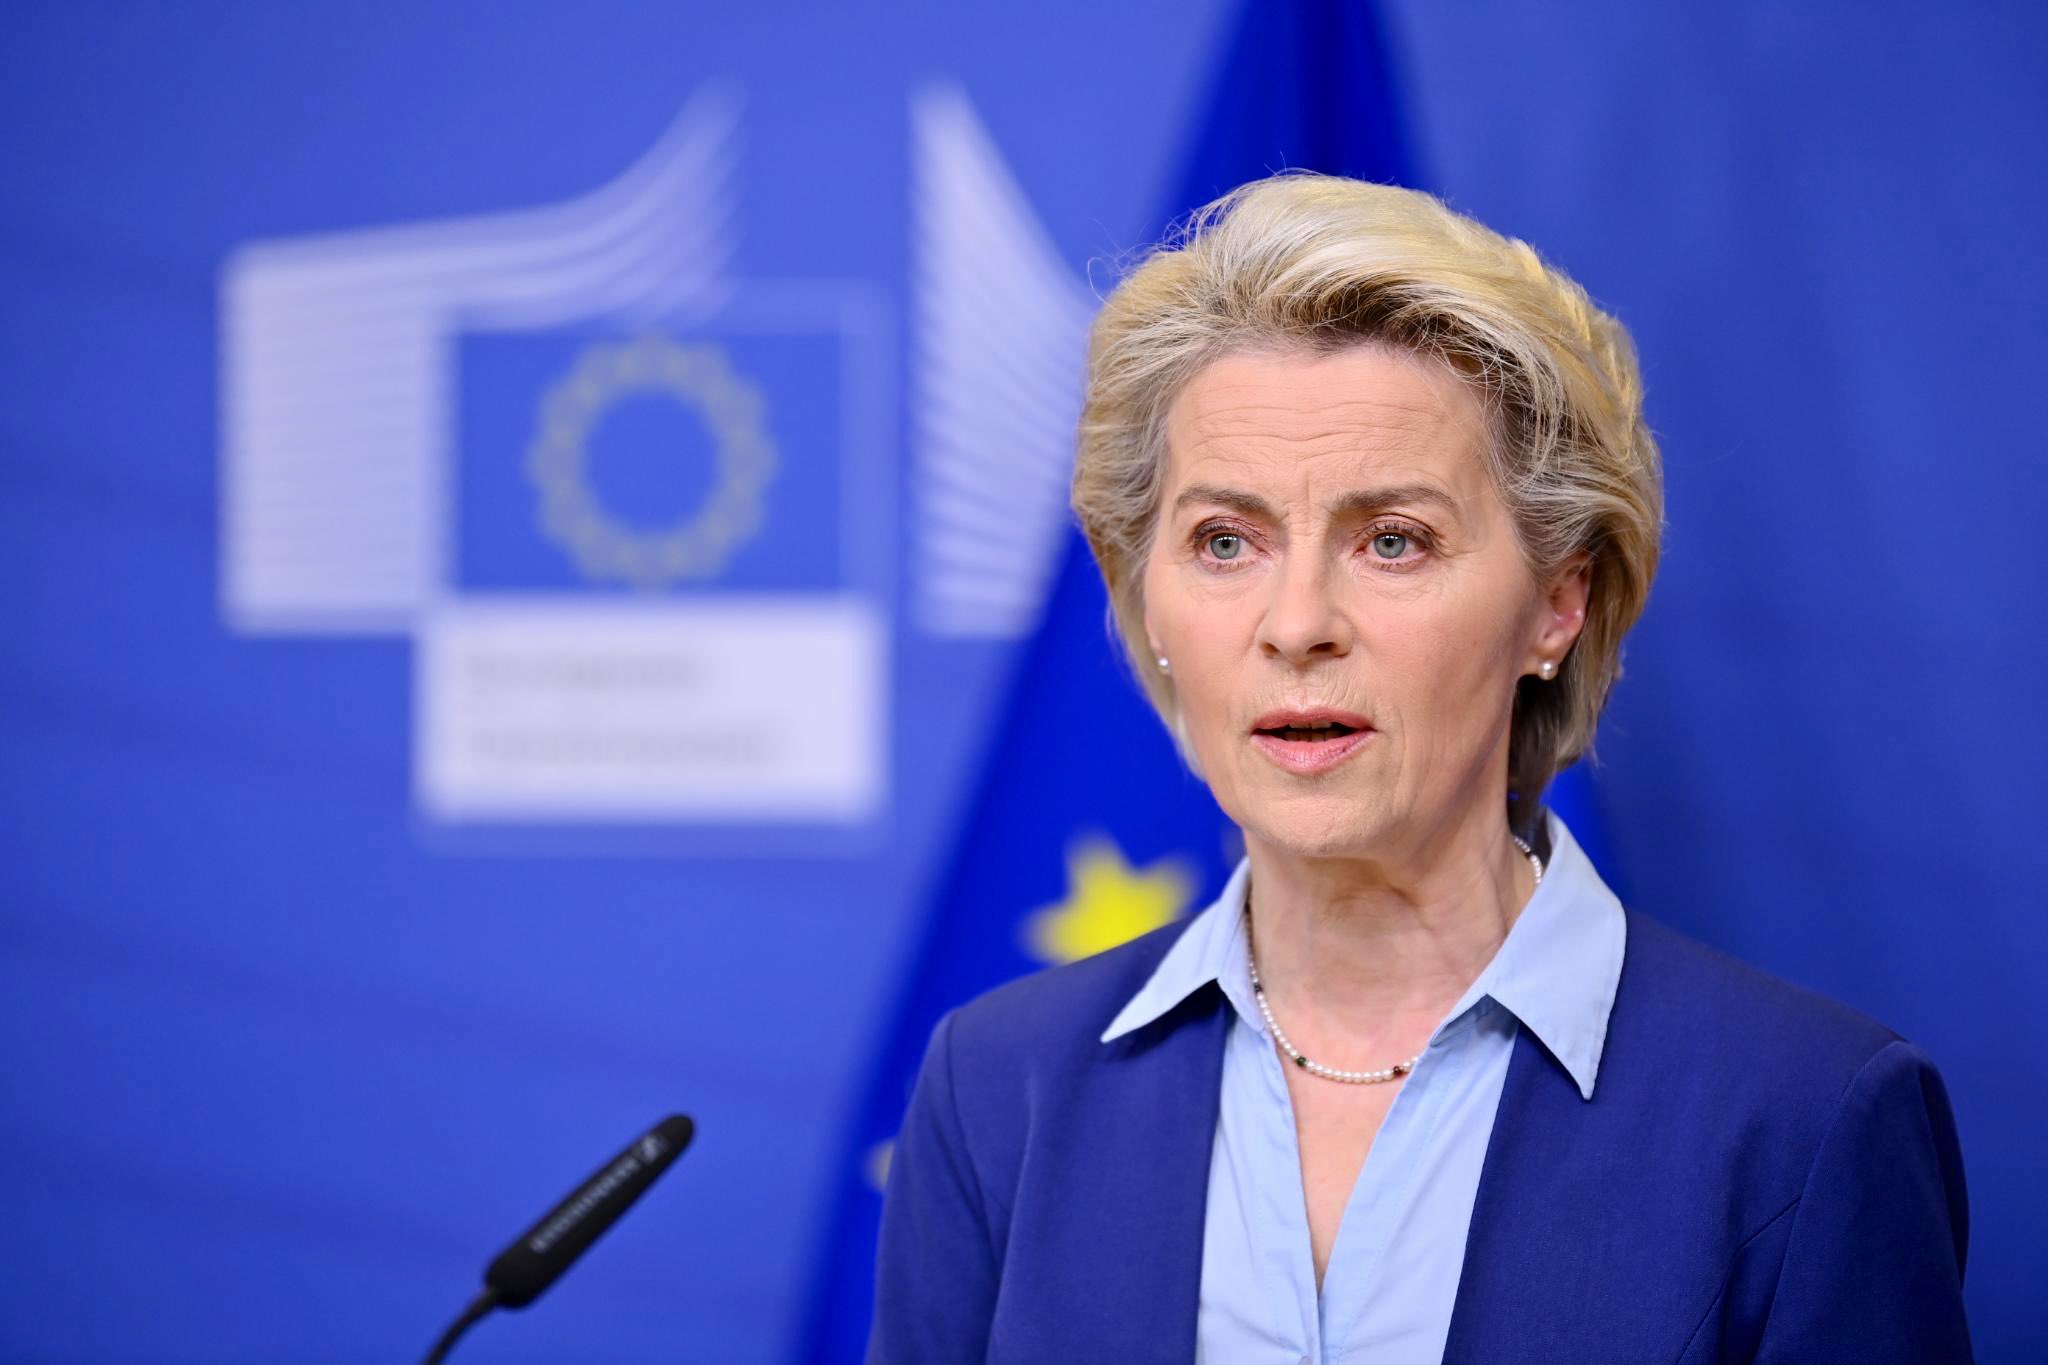 European Commission President Ursula von der Leyen speaking to reporters in Brussels on the Russia/Ukraine situation.